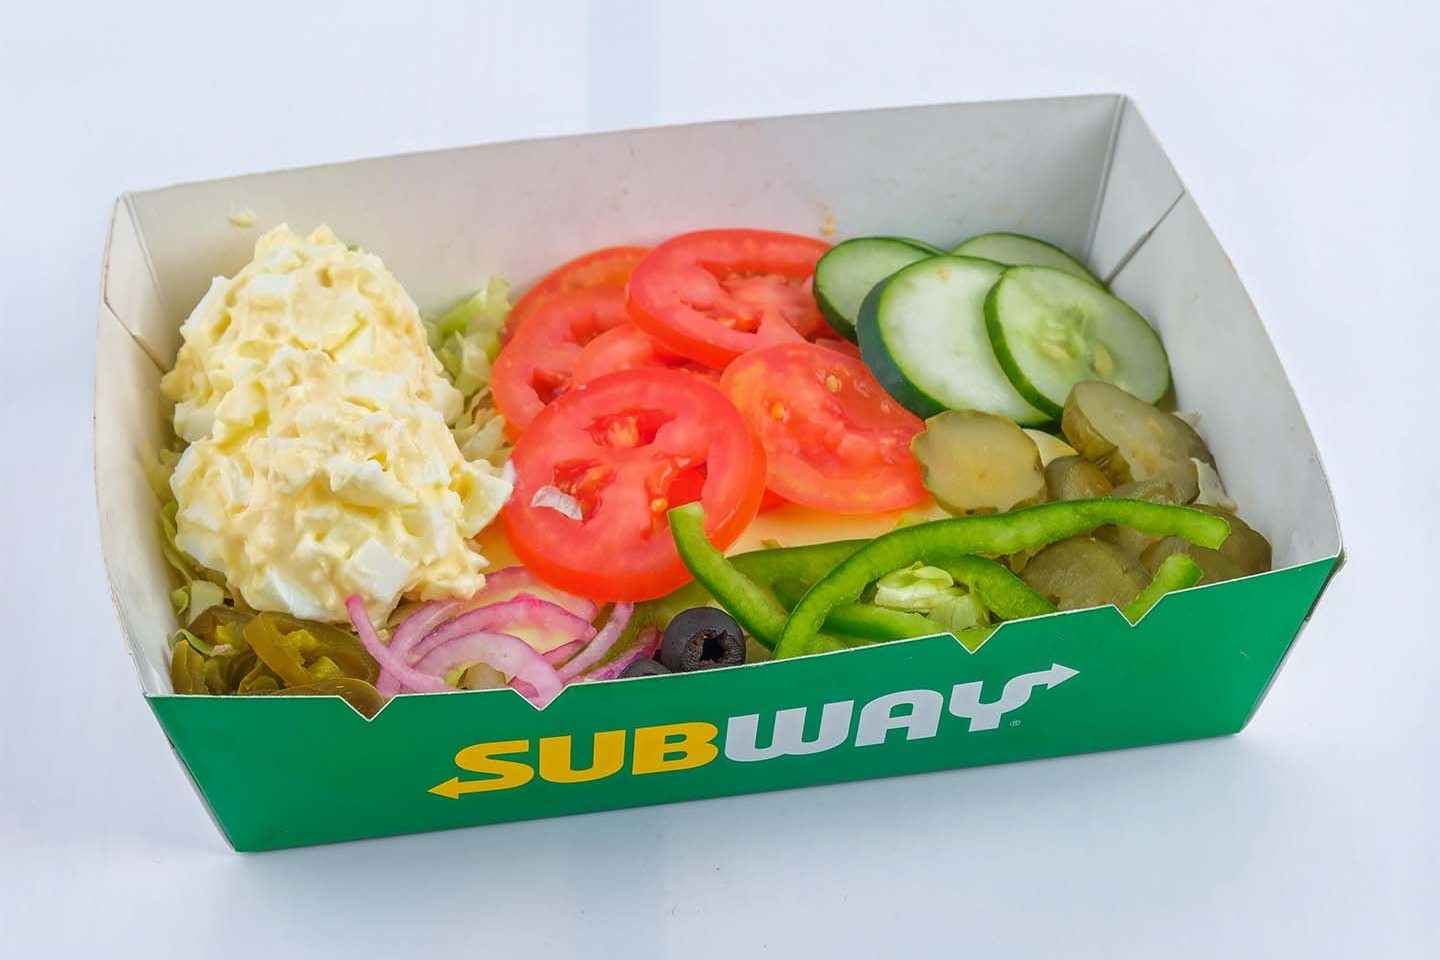 11 Subway Salad Nutrition Facts 1700294617 